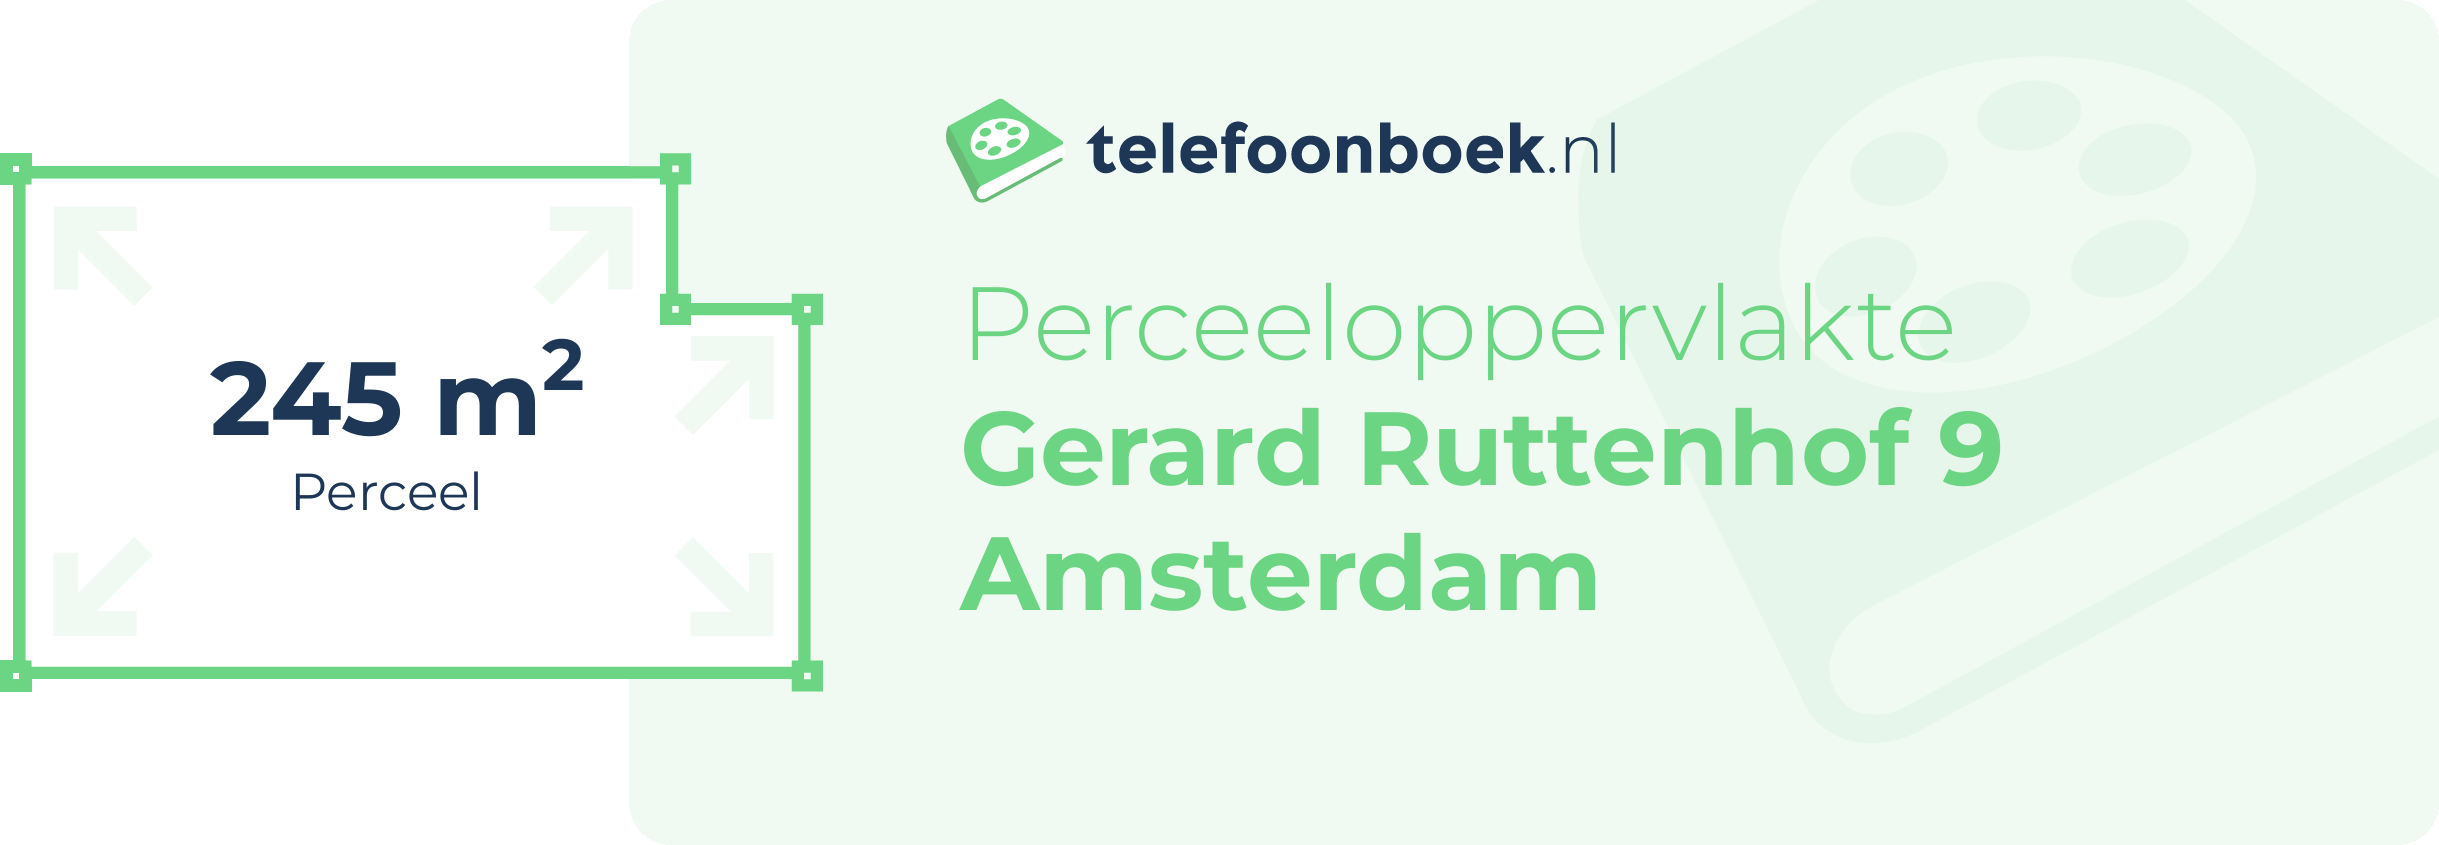 Perceeloppervlakte Gerard Ruttenhof 9 Amsterdam